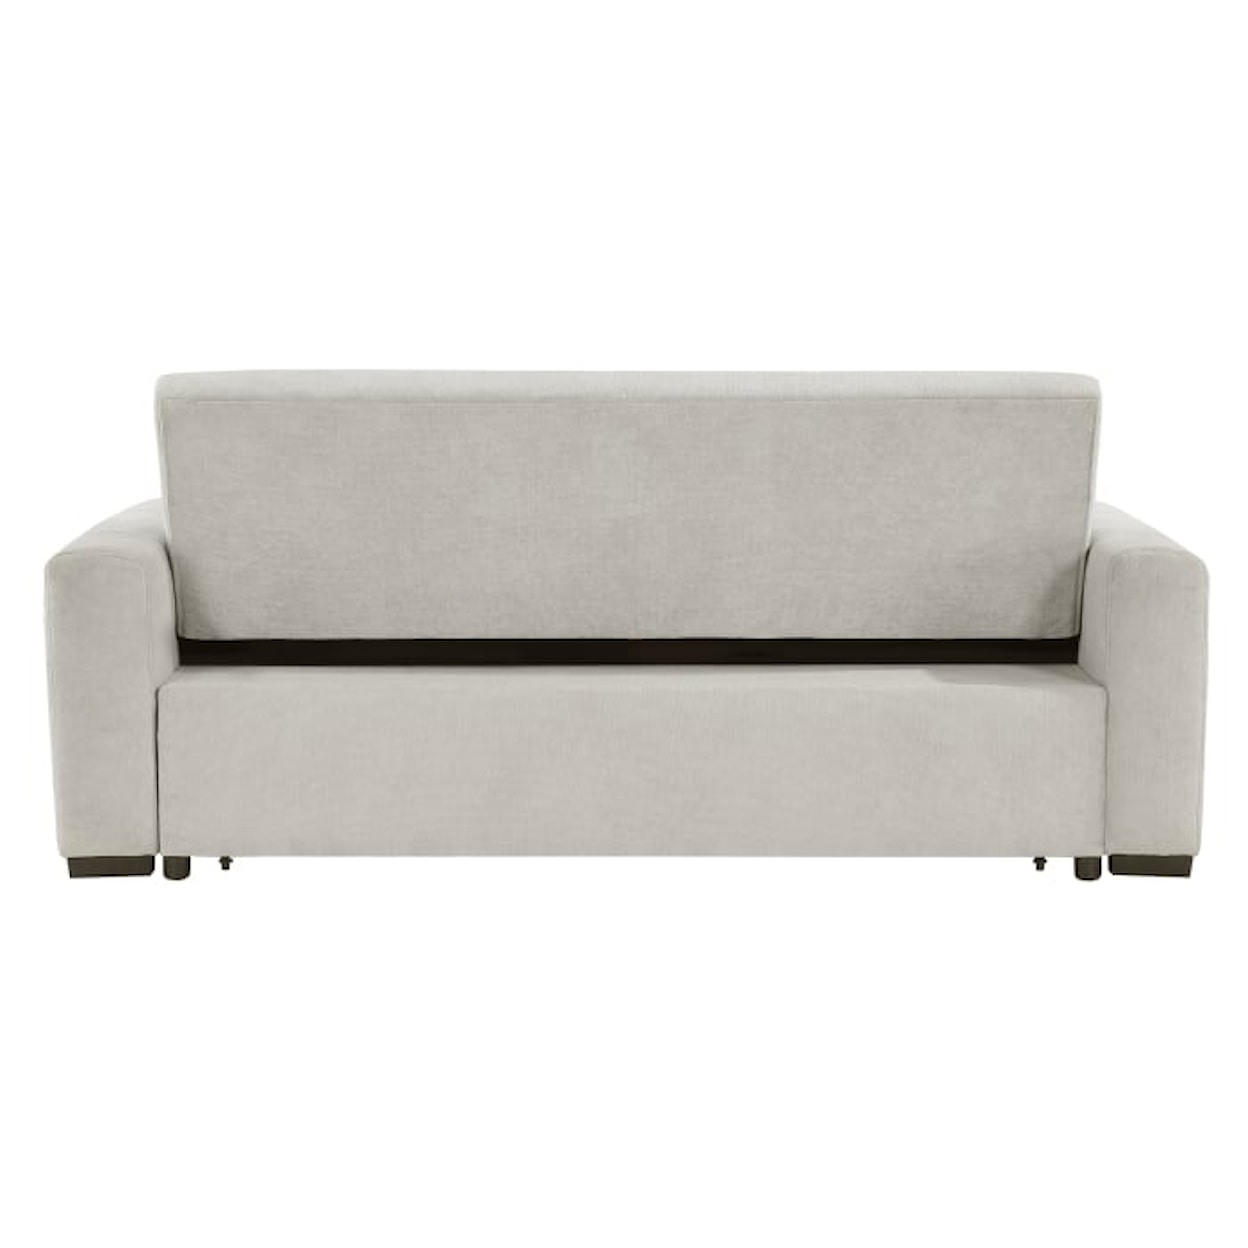 Homelegance Miscellaneous Sofa